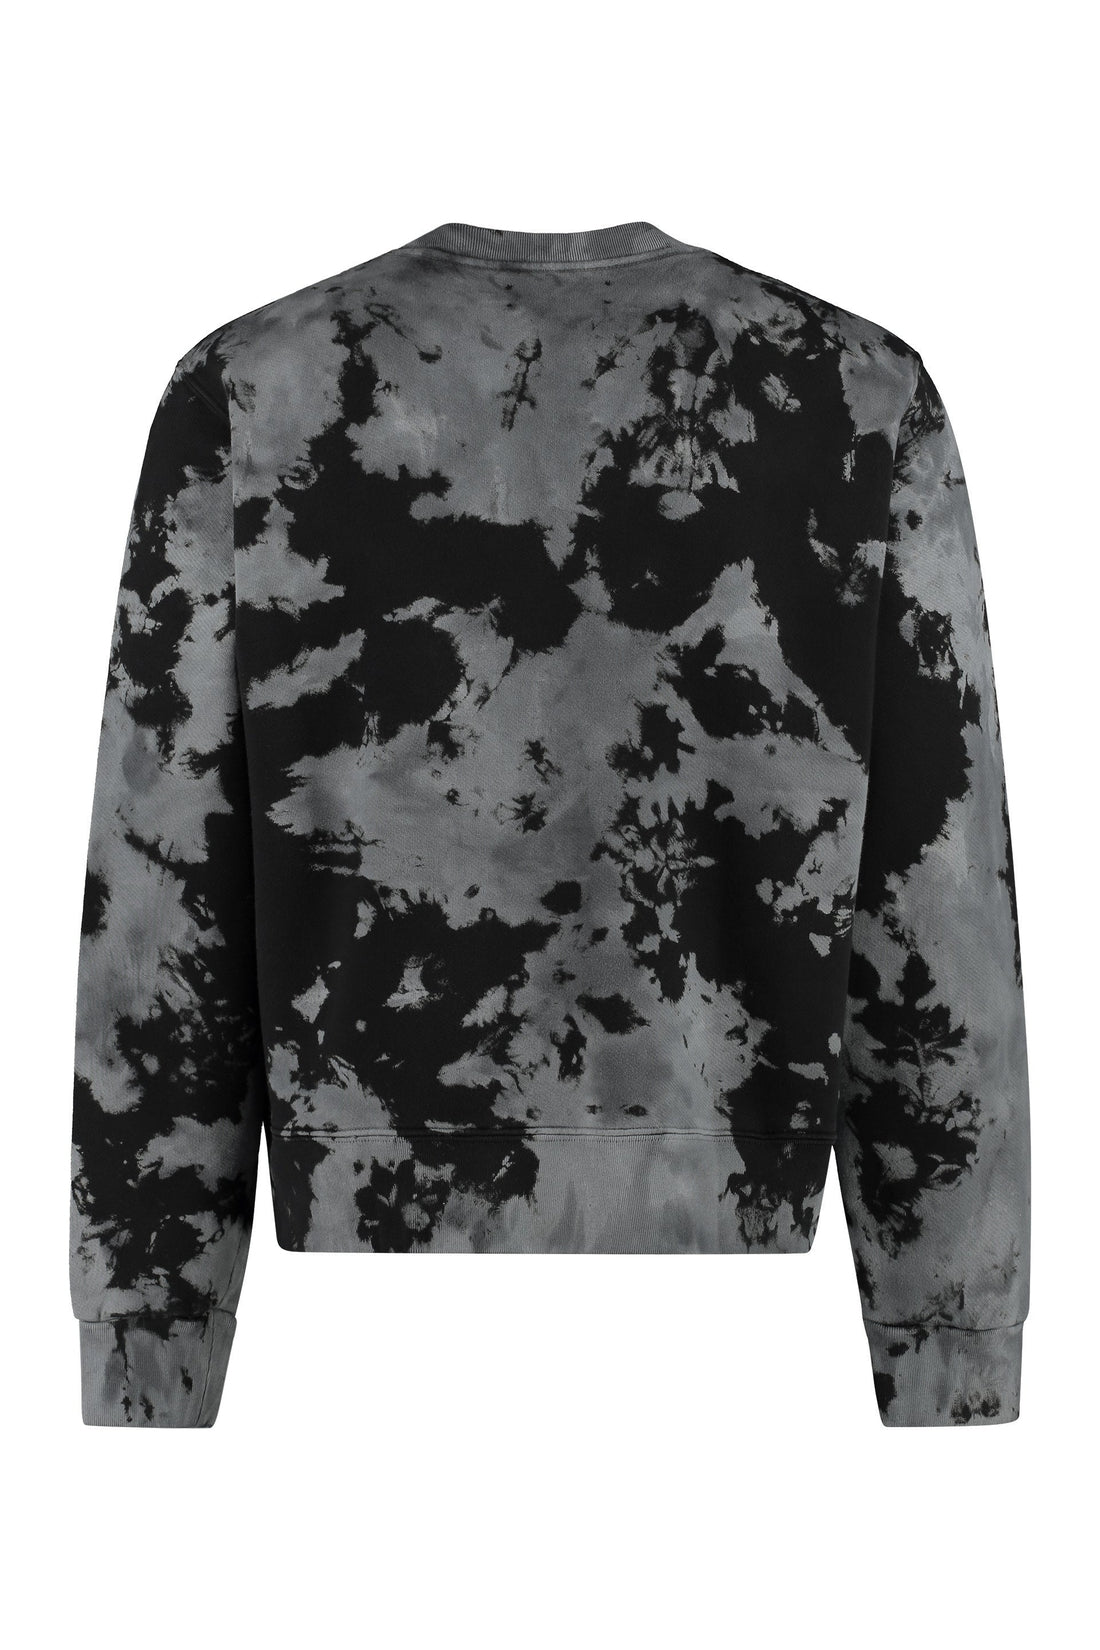 AMIRI-OUTLET-SALE-Printed cotton sweatshirt-ARCHIVIST